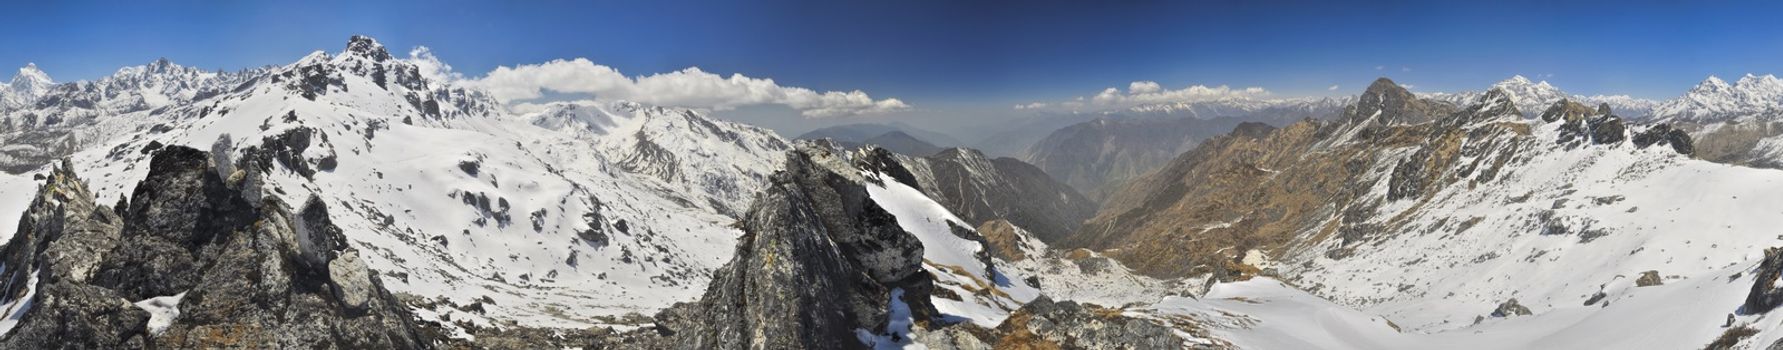 Scenic panorama of Himalayas near Kanchenjunga in Nepal